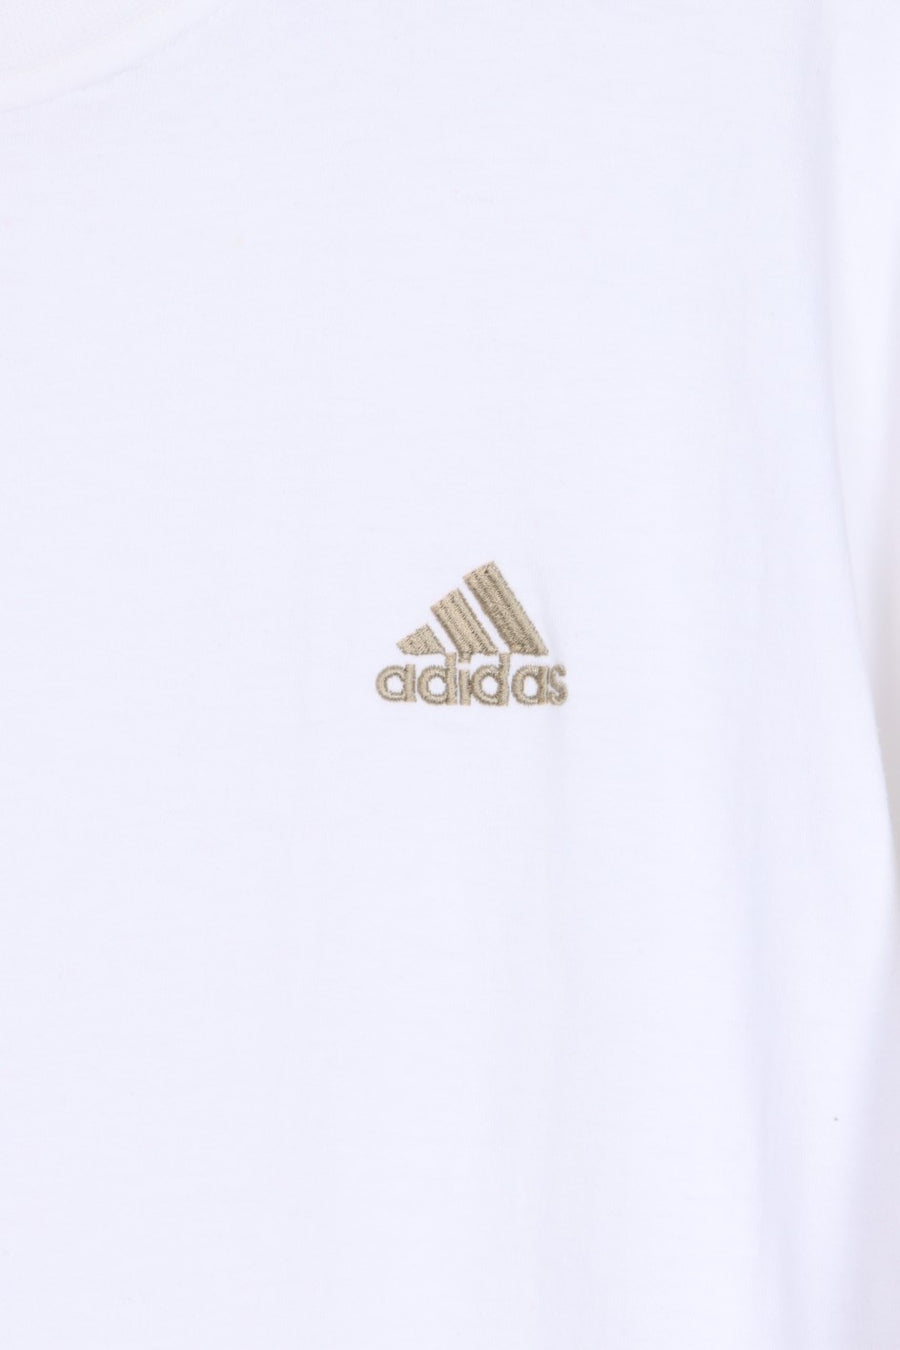 ADIDAS Embroidered Gold 3-Stripes Logo T-Shirt (XL)